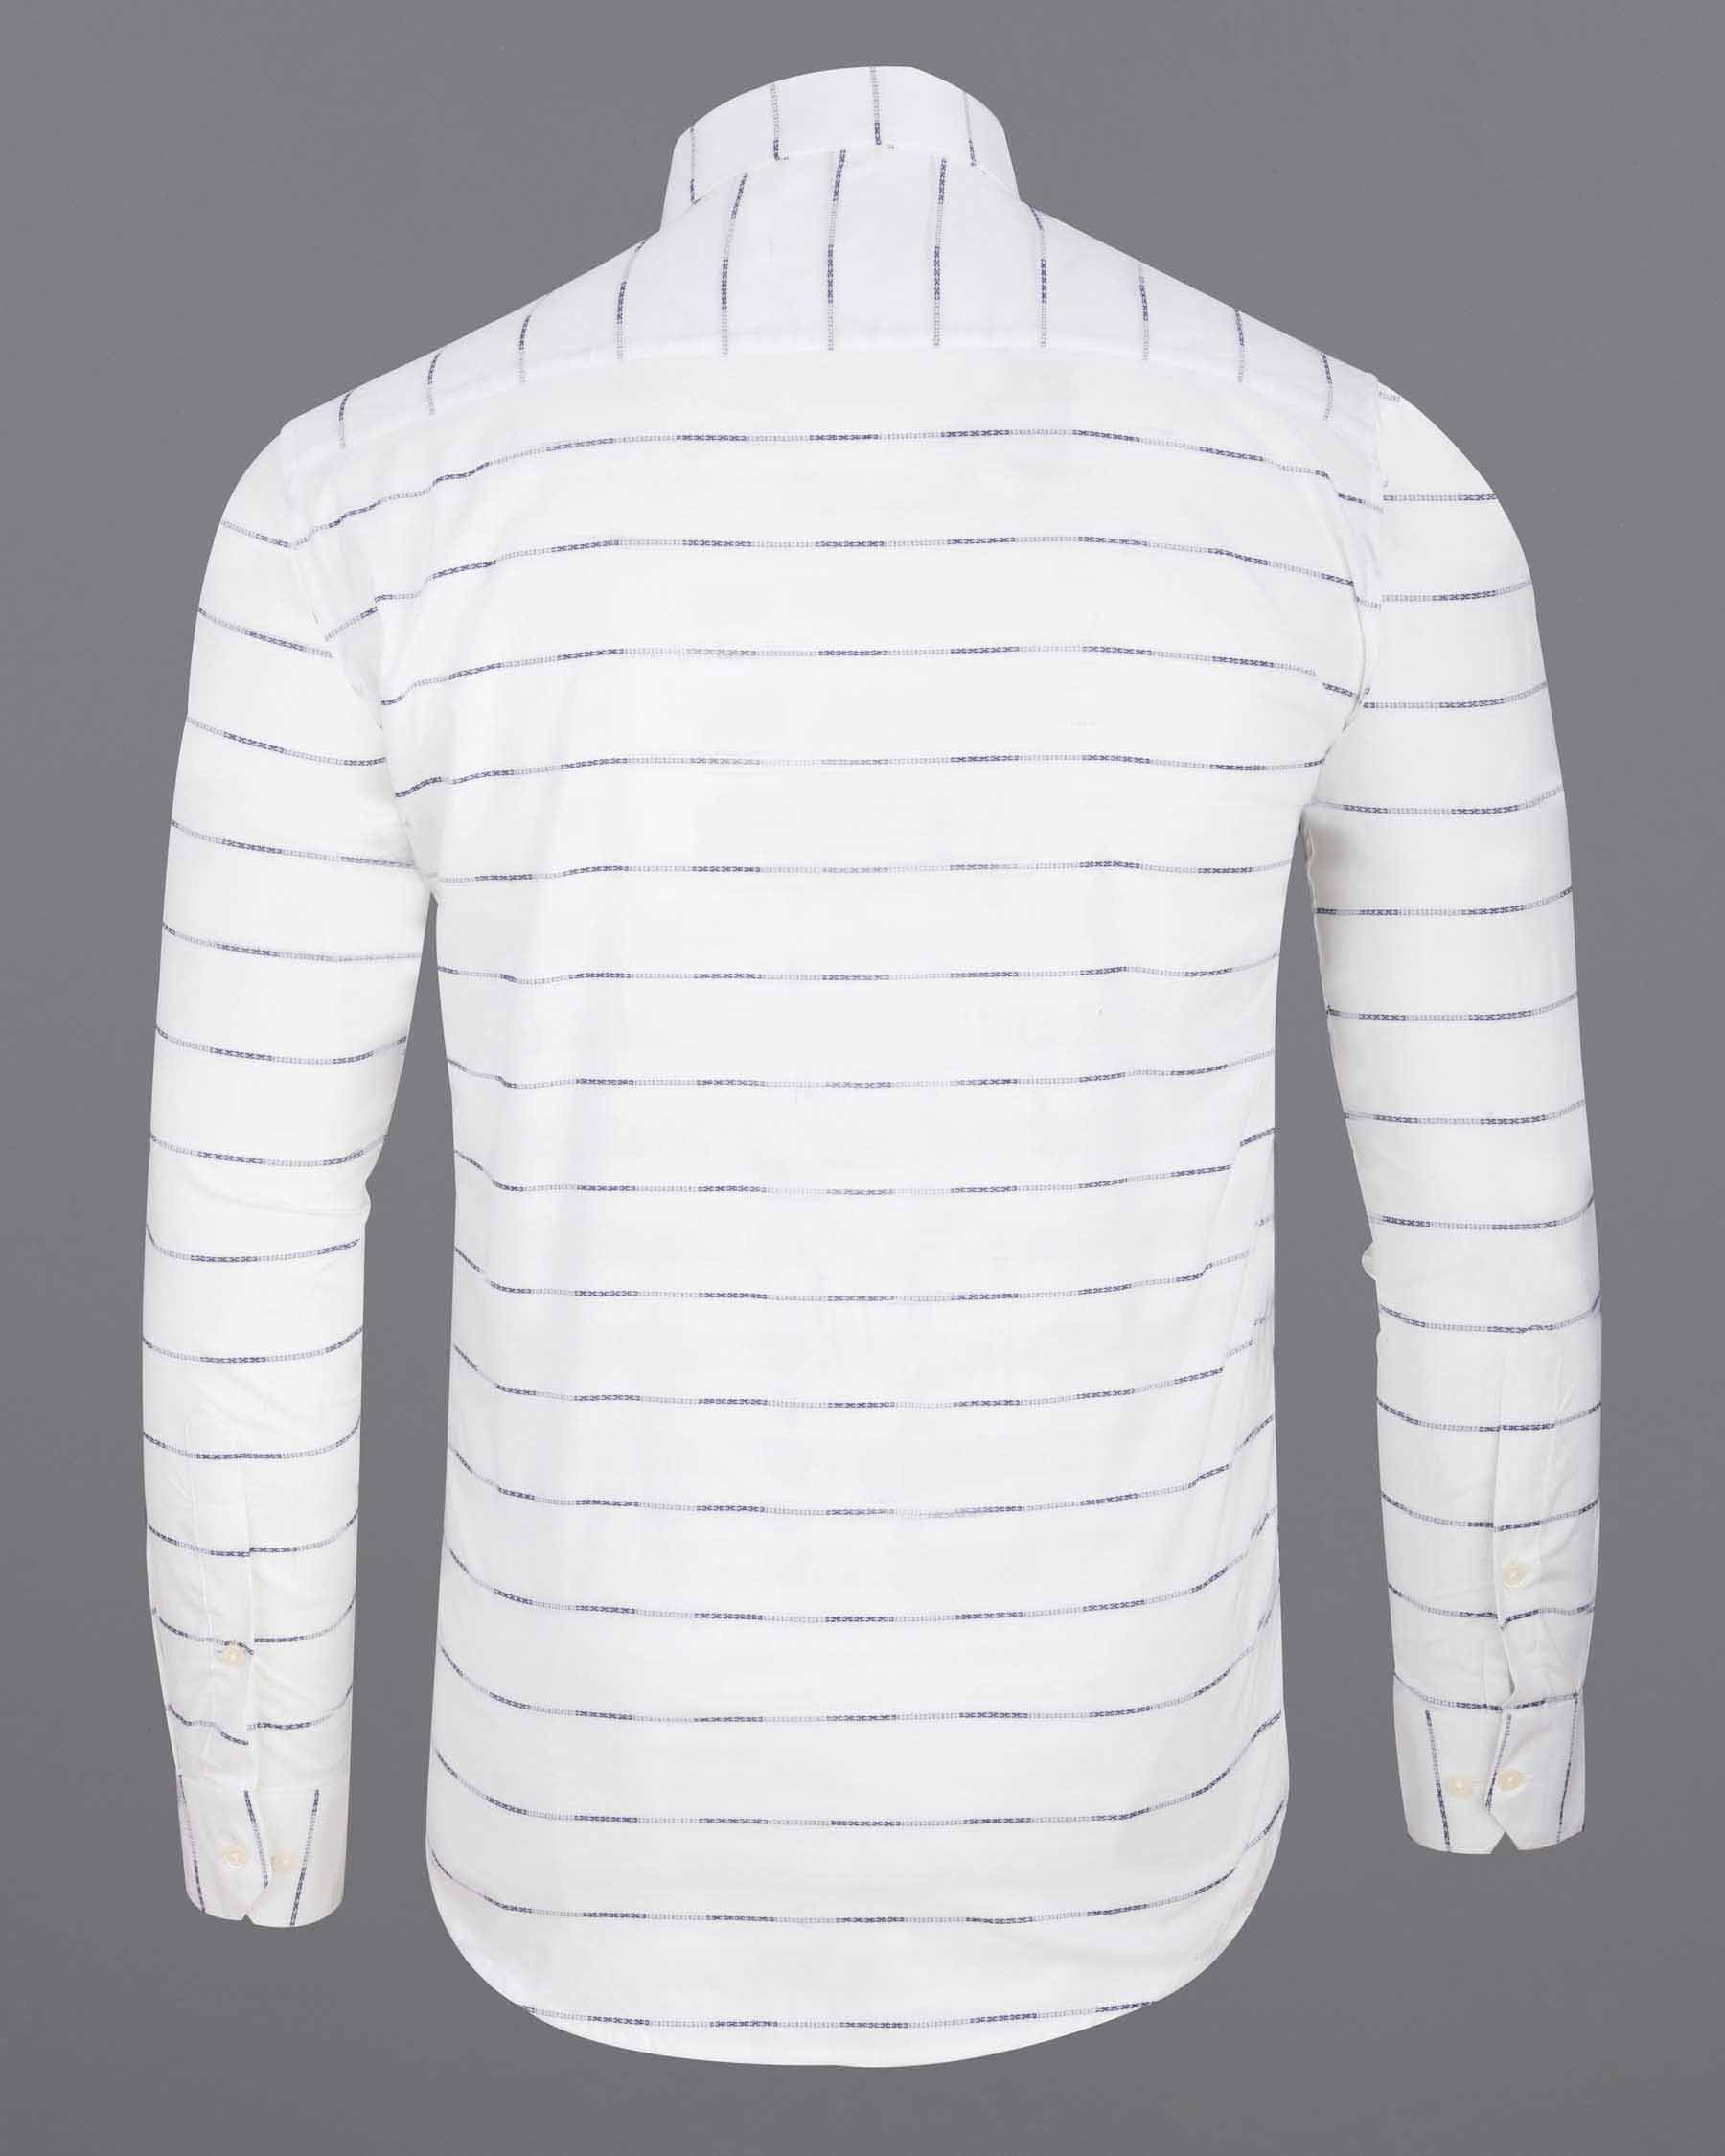 Bright White Striped Dobby Striped Premium Giza Cotton Shirt 6164-CA-38, 6164-CA-H-38, 6164-CA-39, 6164-CA-H-39, 6164-CA-40, 6164-CA-H-40, 6164-CA-42, 6164-CA-H-42, 6164-CA-44, 6164-CA-H-44, 6164-CA-46, 6164-CA-H-46, 6164-CA-48, 6164-CA-H-48, 6164-CA-50, 6164-CA-H-50, 6164-CA-52, 6164-CA-H-52